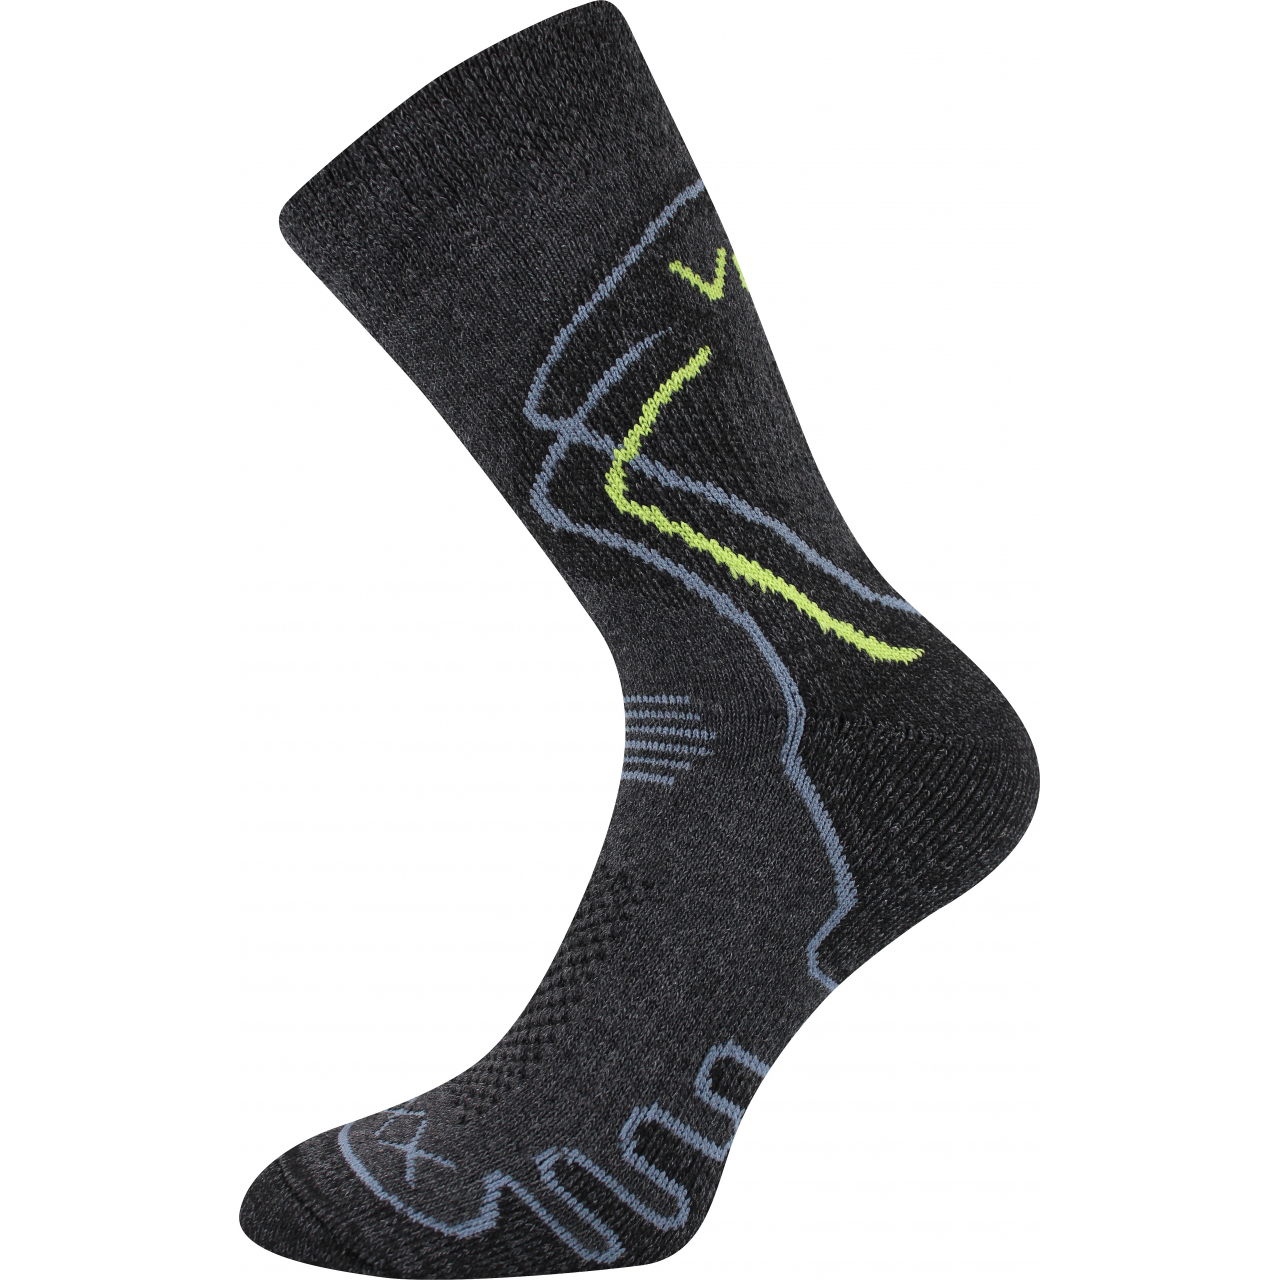 Ponožky trekingové unisex Voxx Limit III - tmavě šedé, 43-46